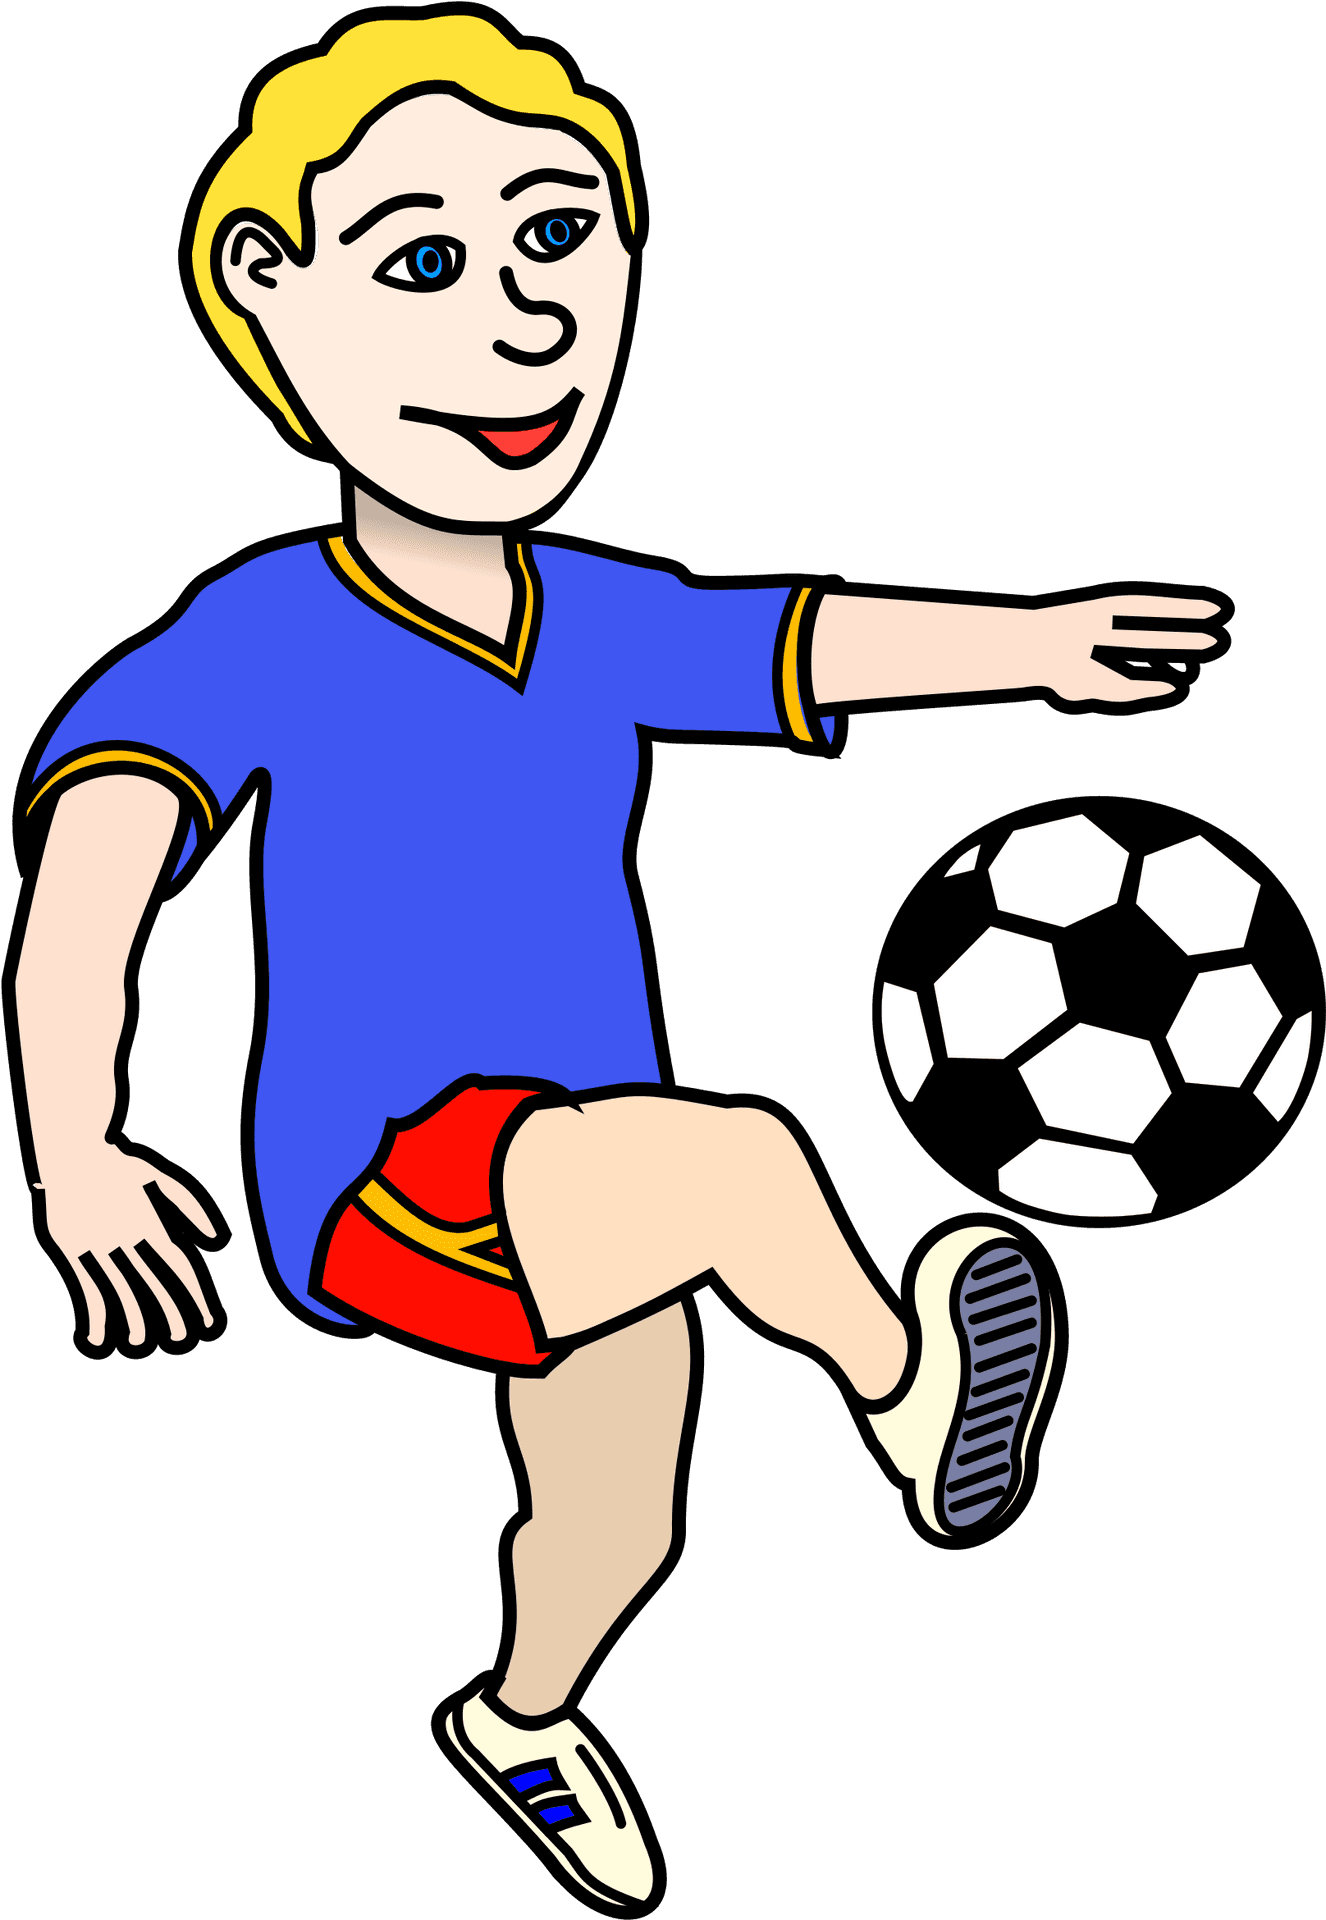 Cartoon Soccer Player Kicking Ball.png PNG image